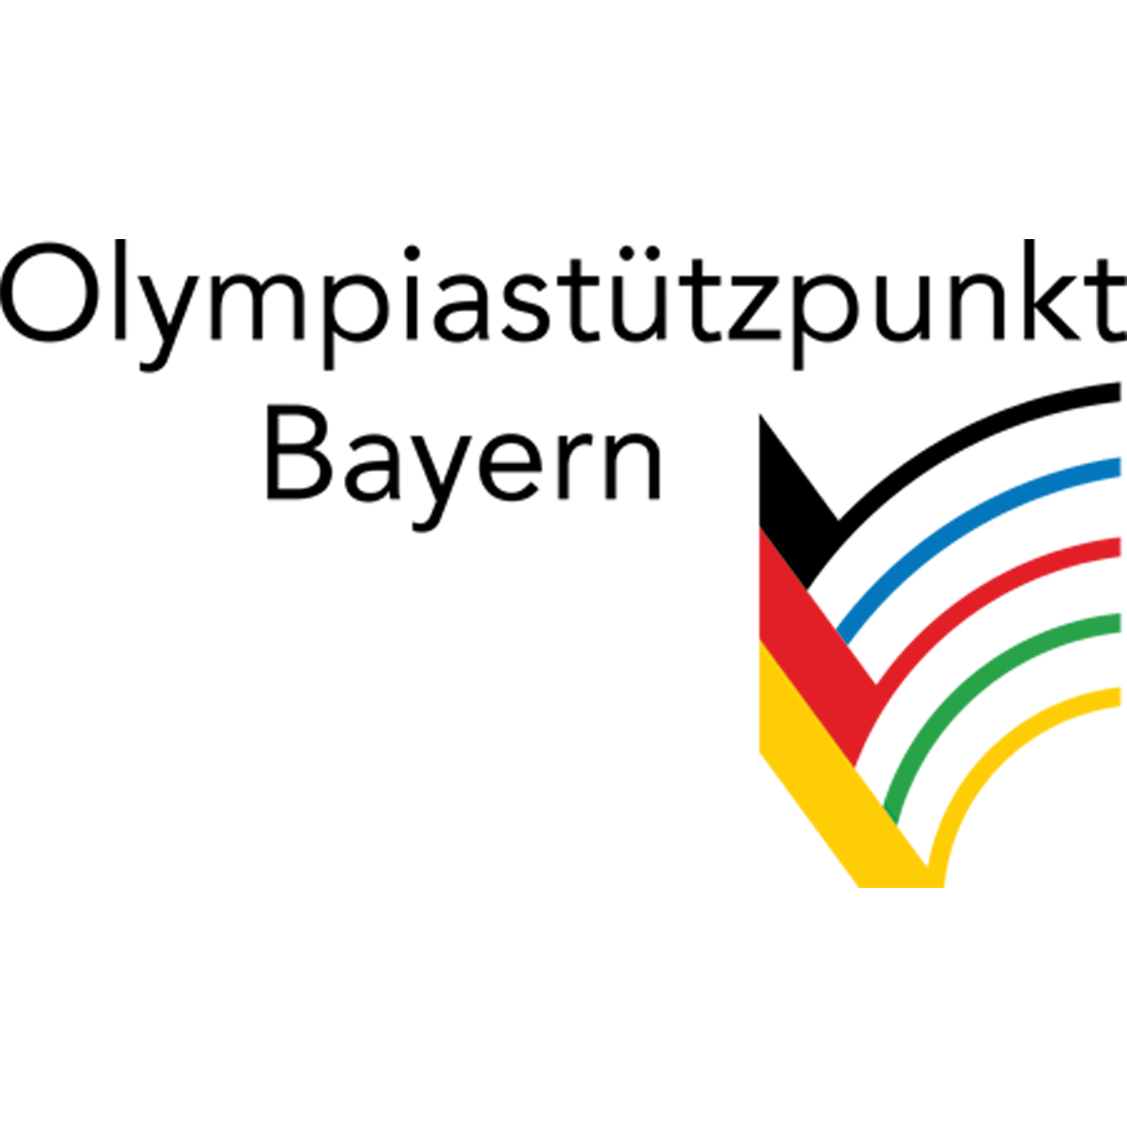 Olympiastützpunkt Bayern (OSP) in München - Logo